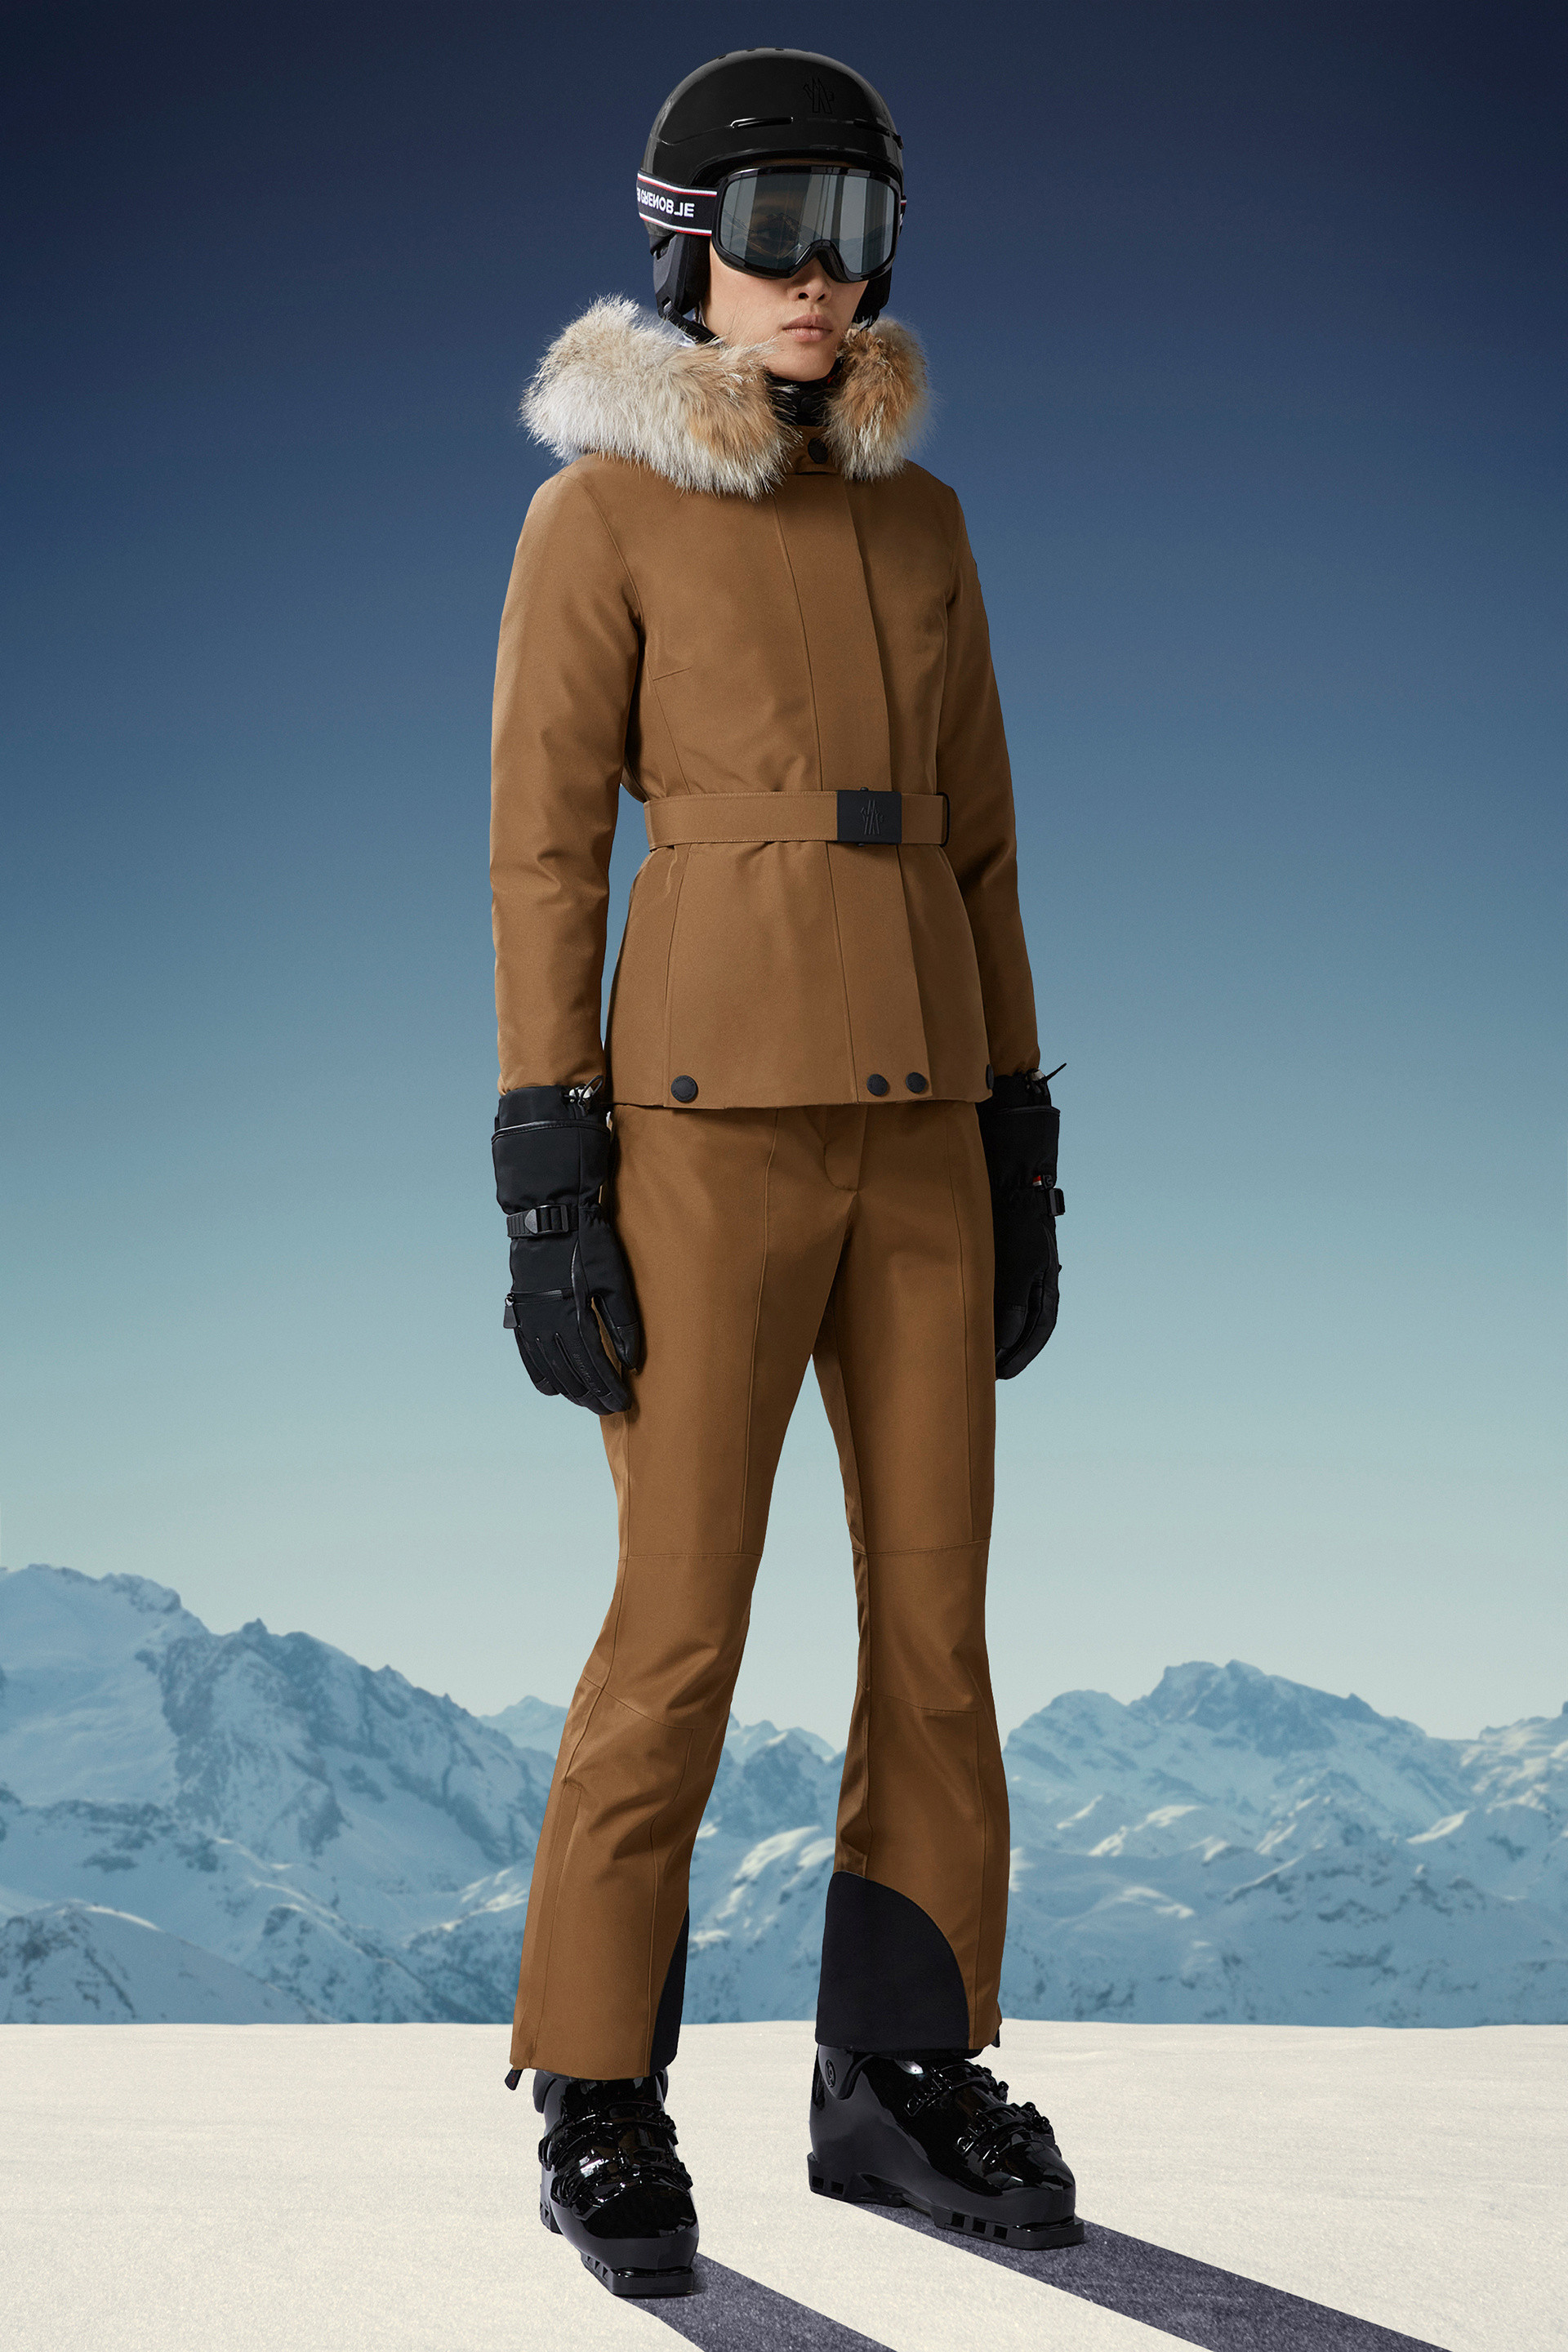 Mountain Warehouse Swiss Women's Recco Ski Jacket Ladies Padded Snow Proof  Coat